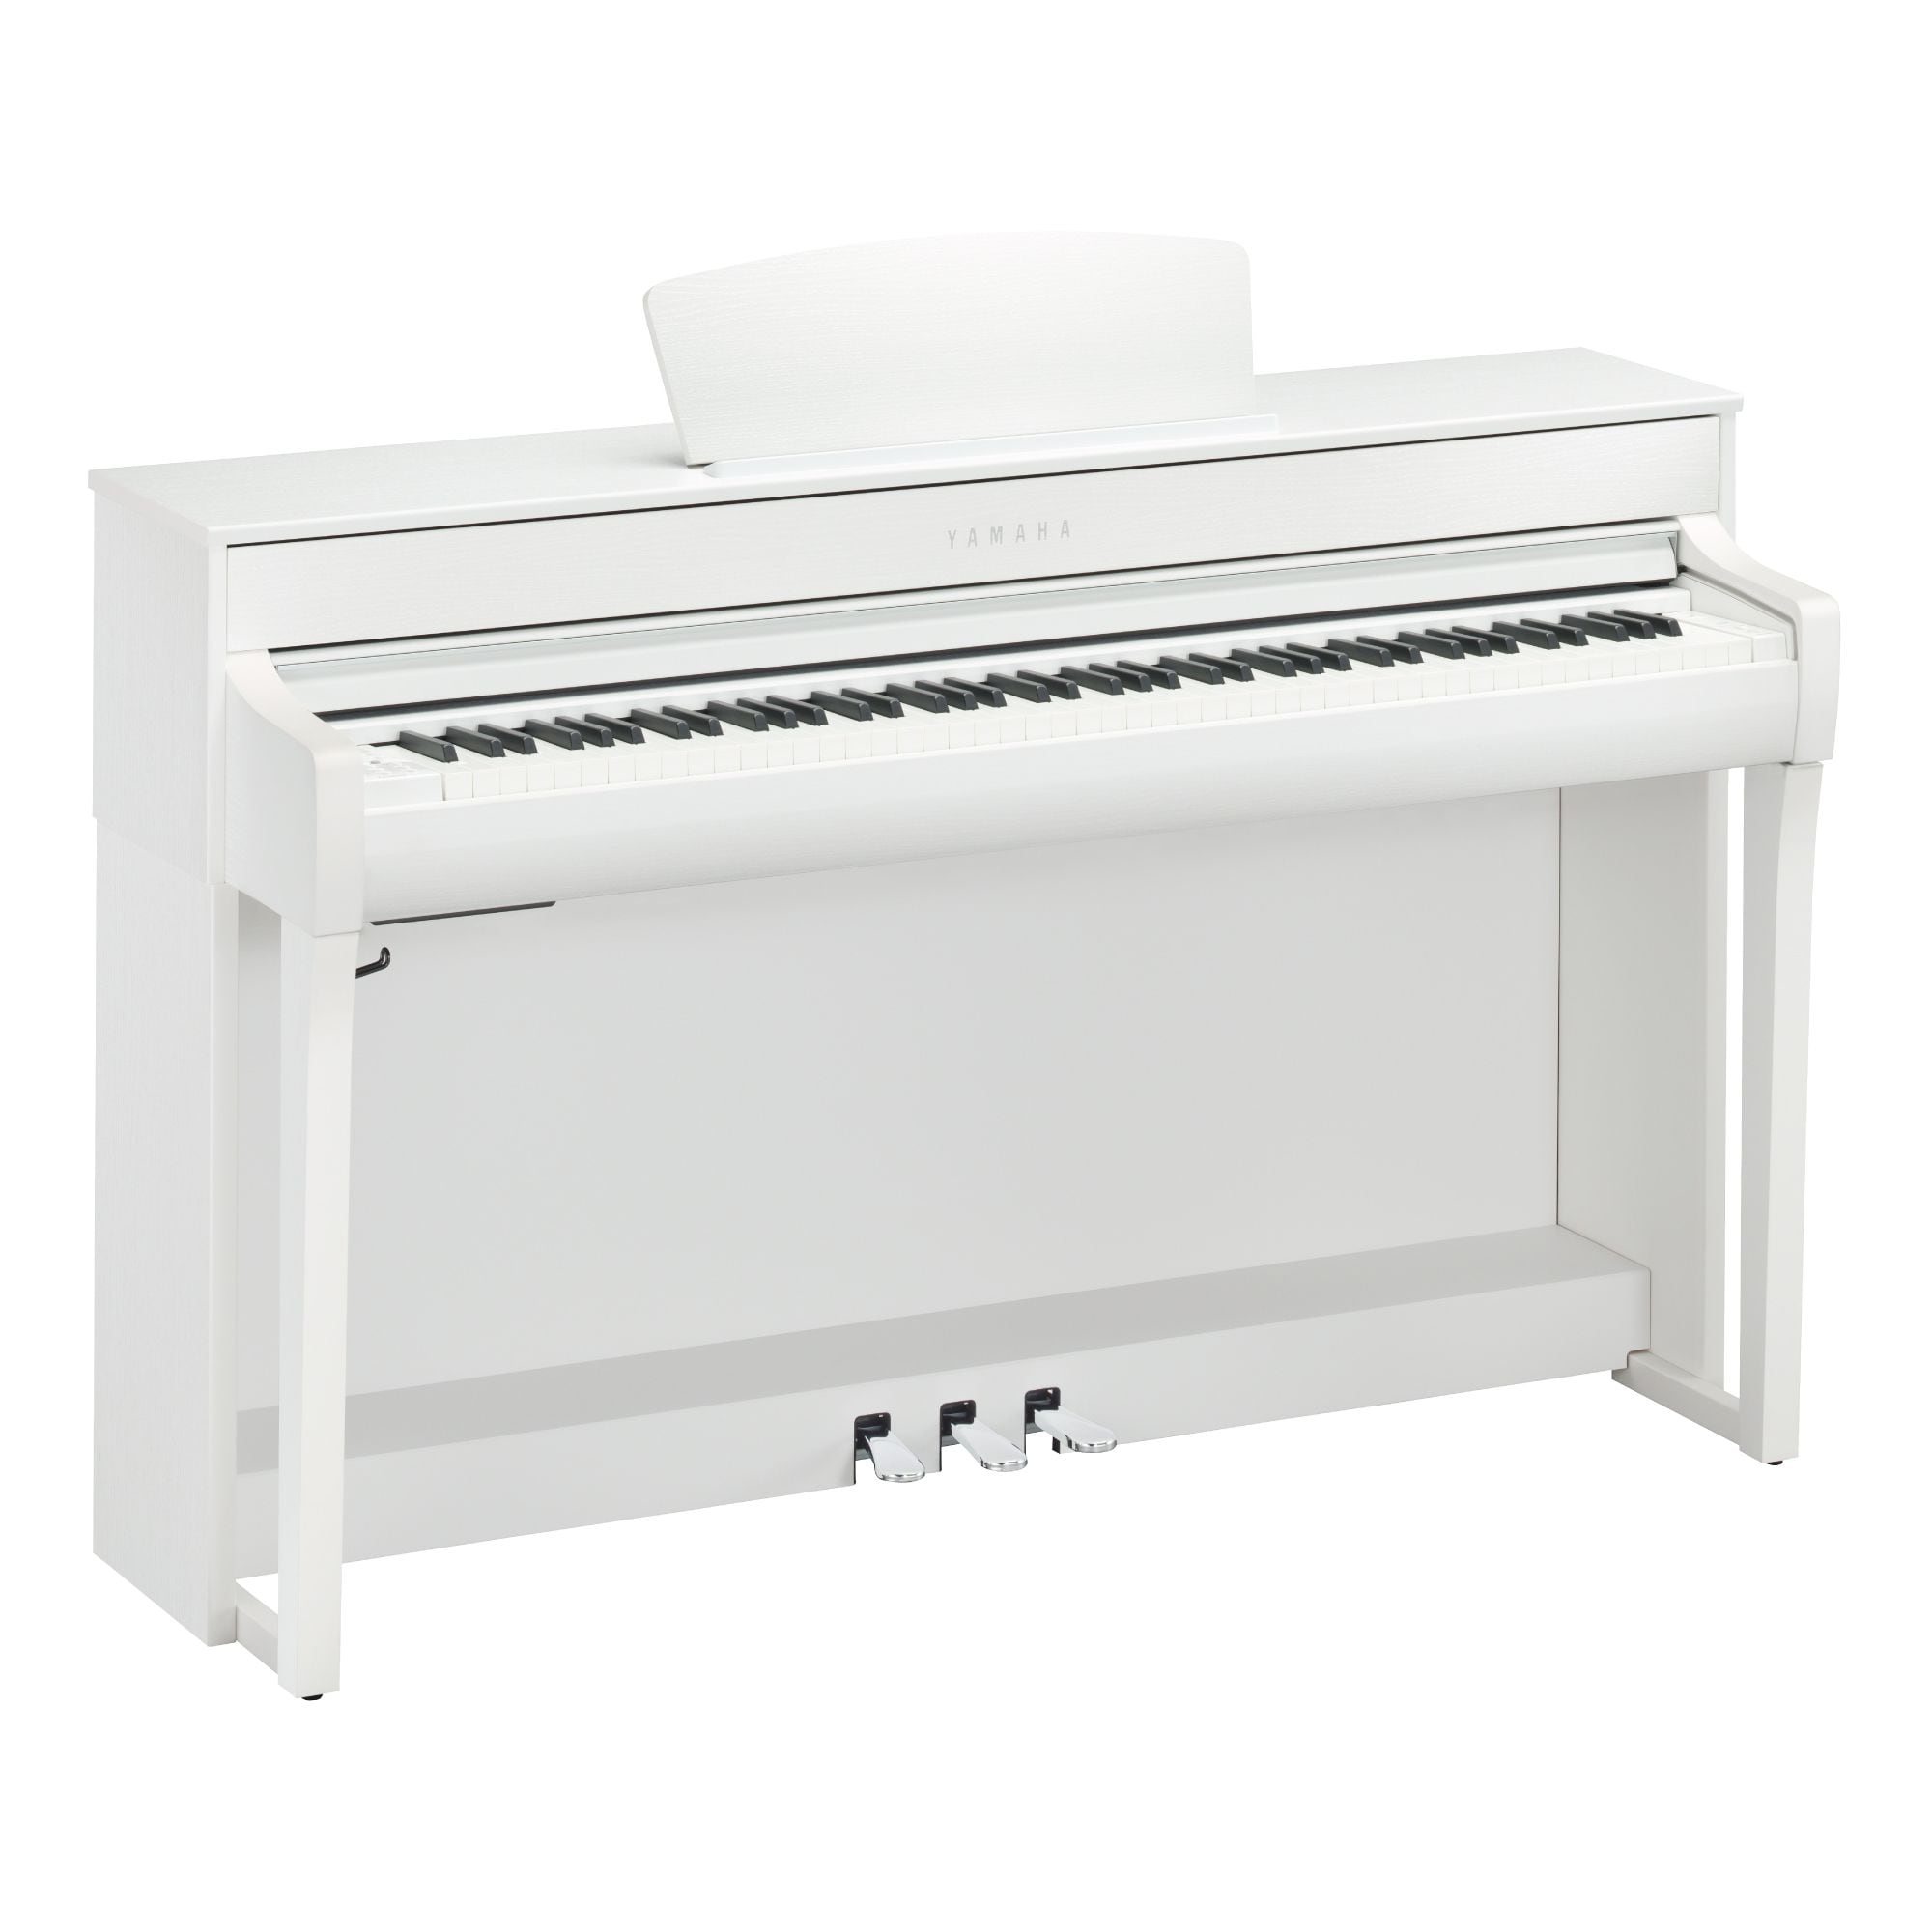 Yamaha CLP-735 Clavinova Digital Console Piano